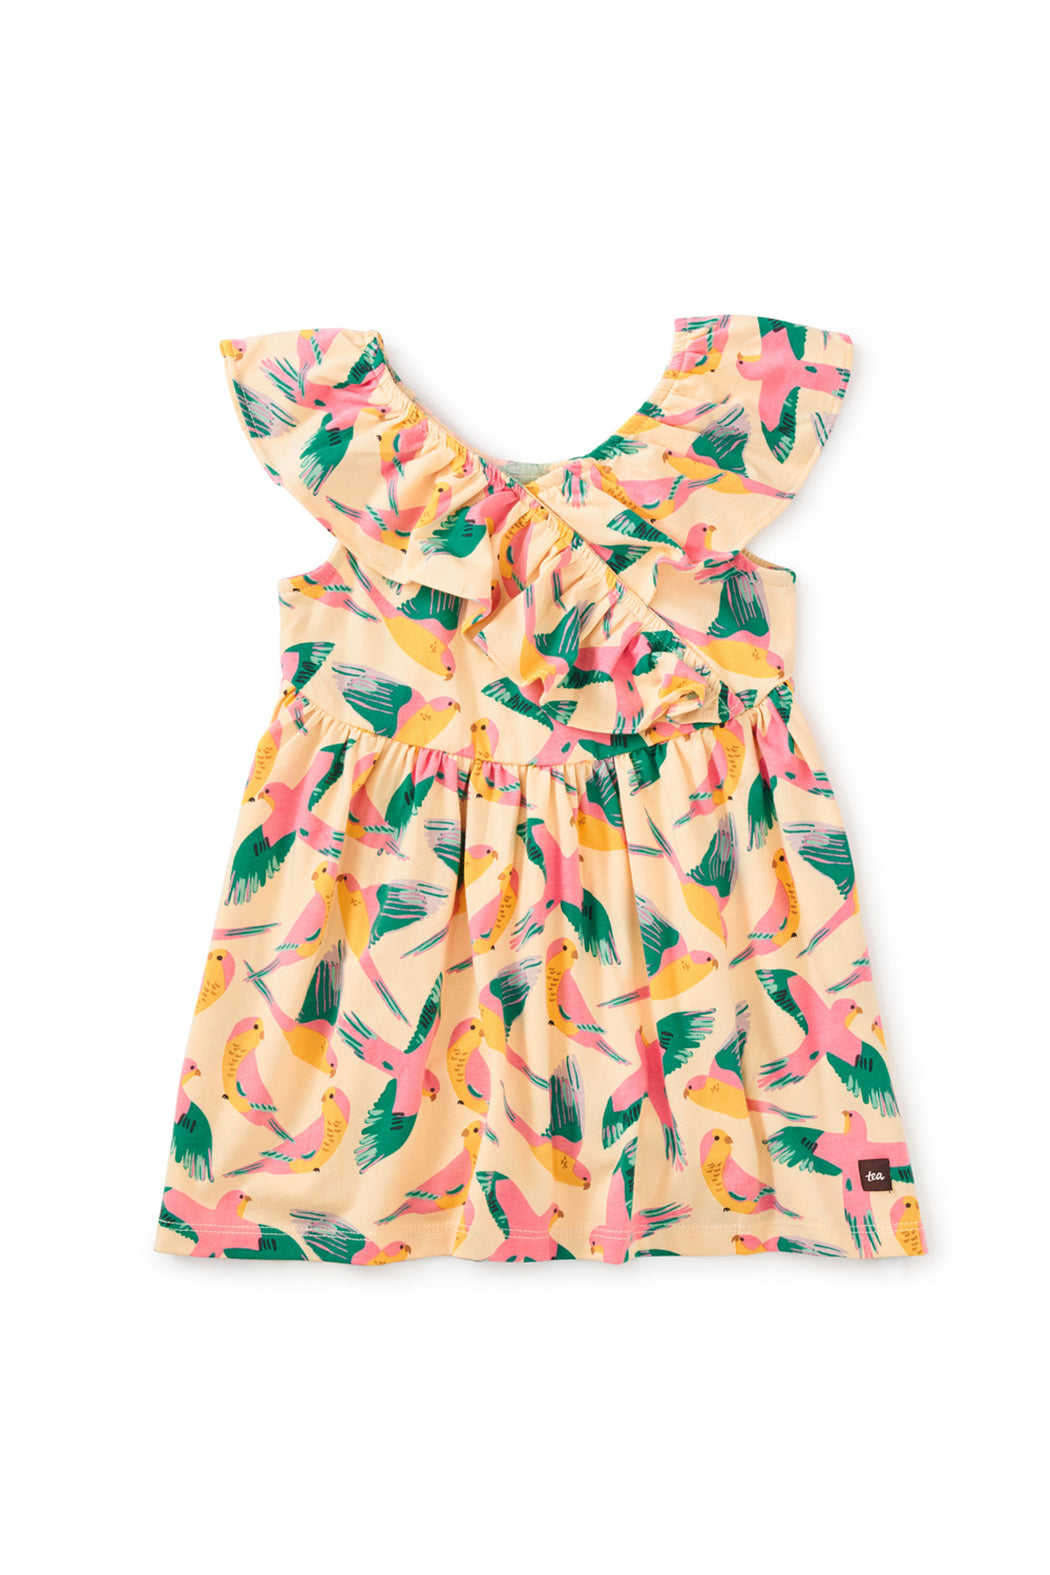 Tea Collection Ruffle Neck Baby Dress - Parrot Polka